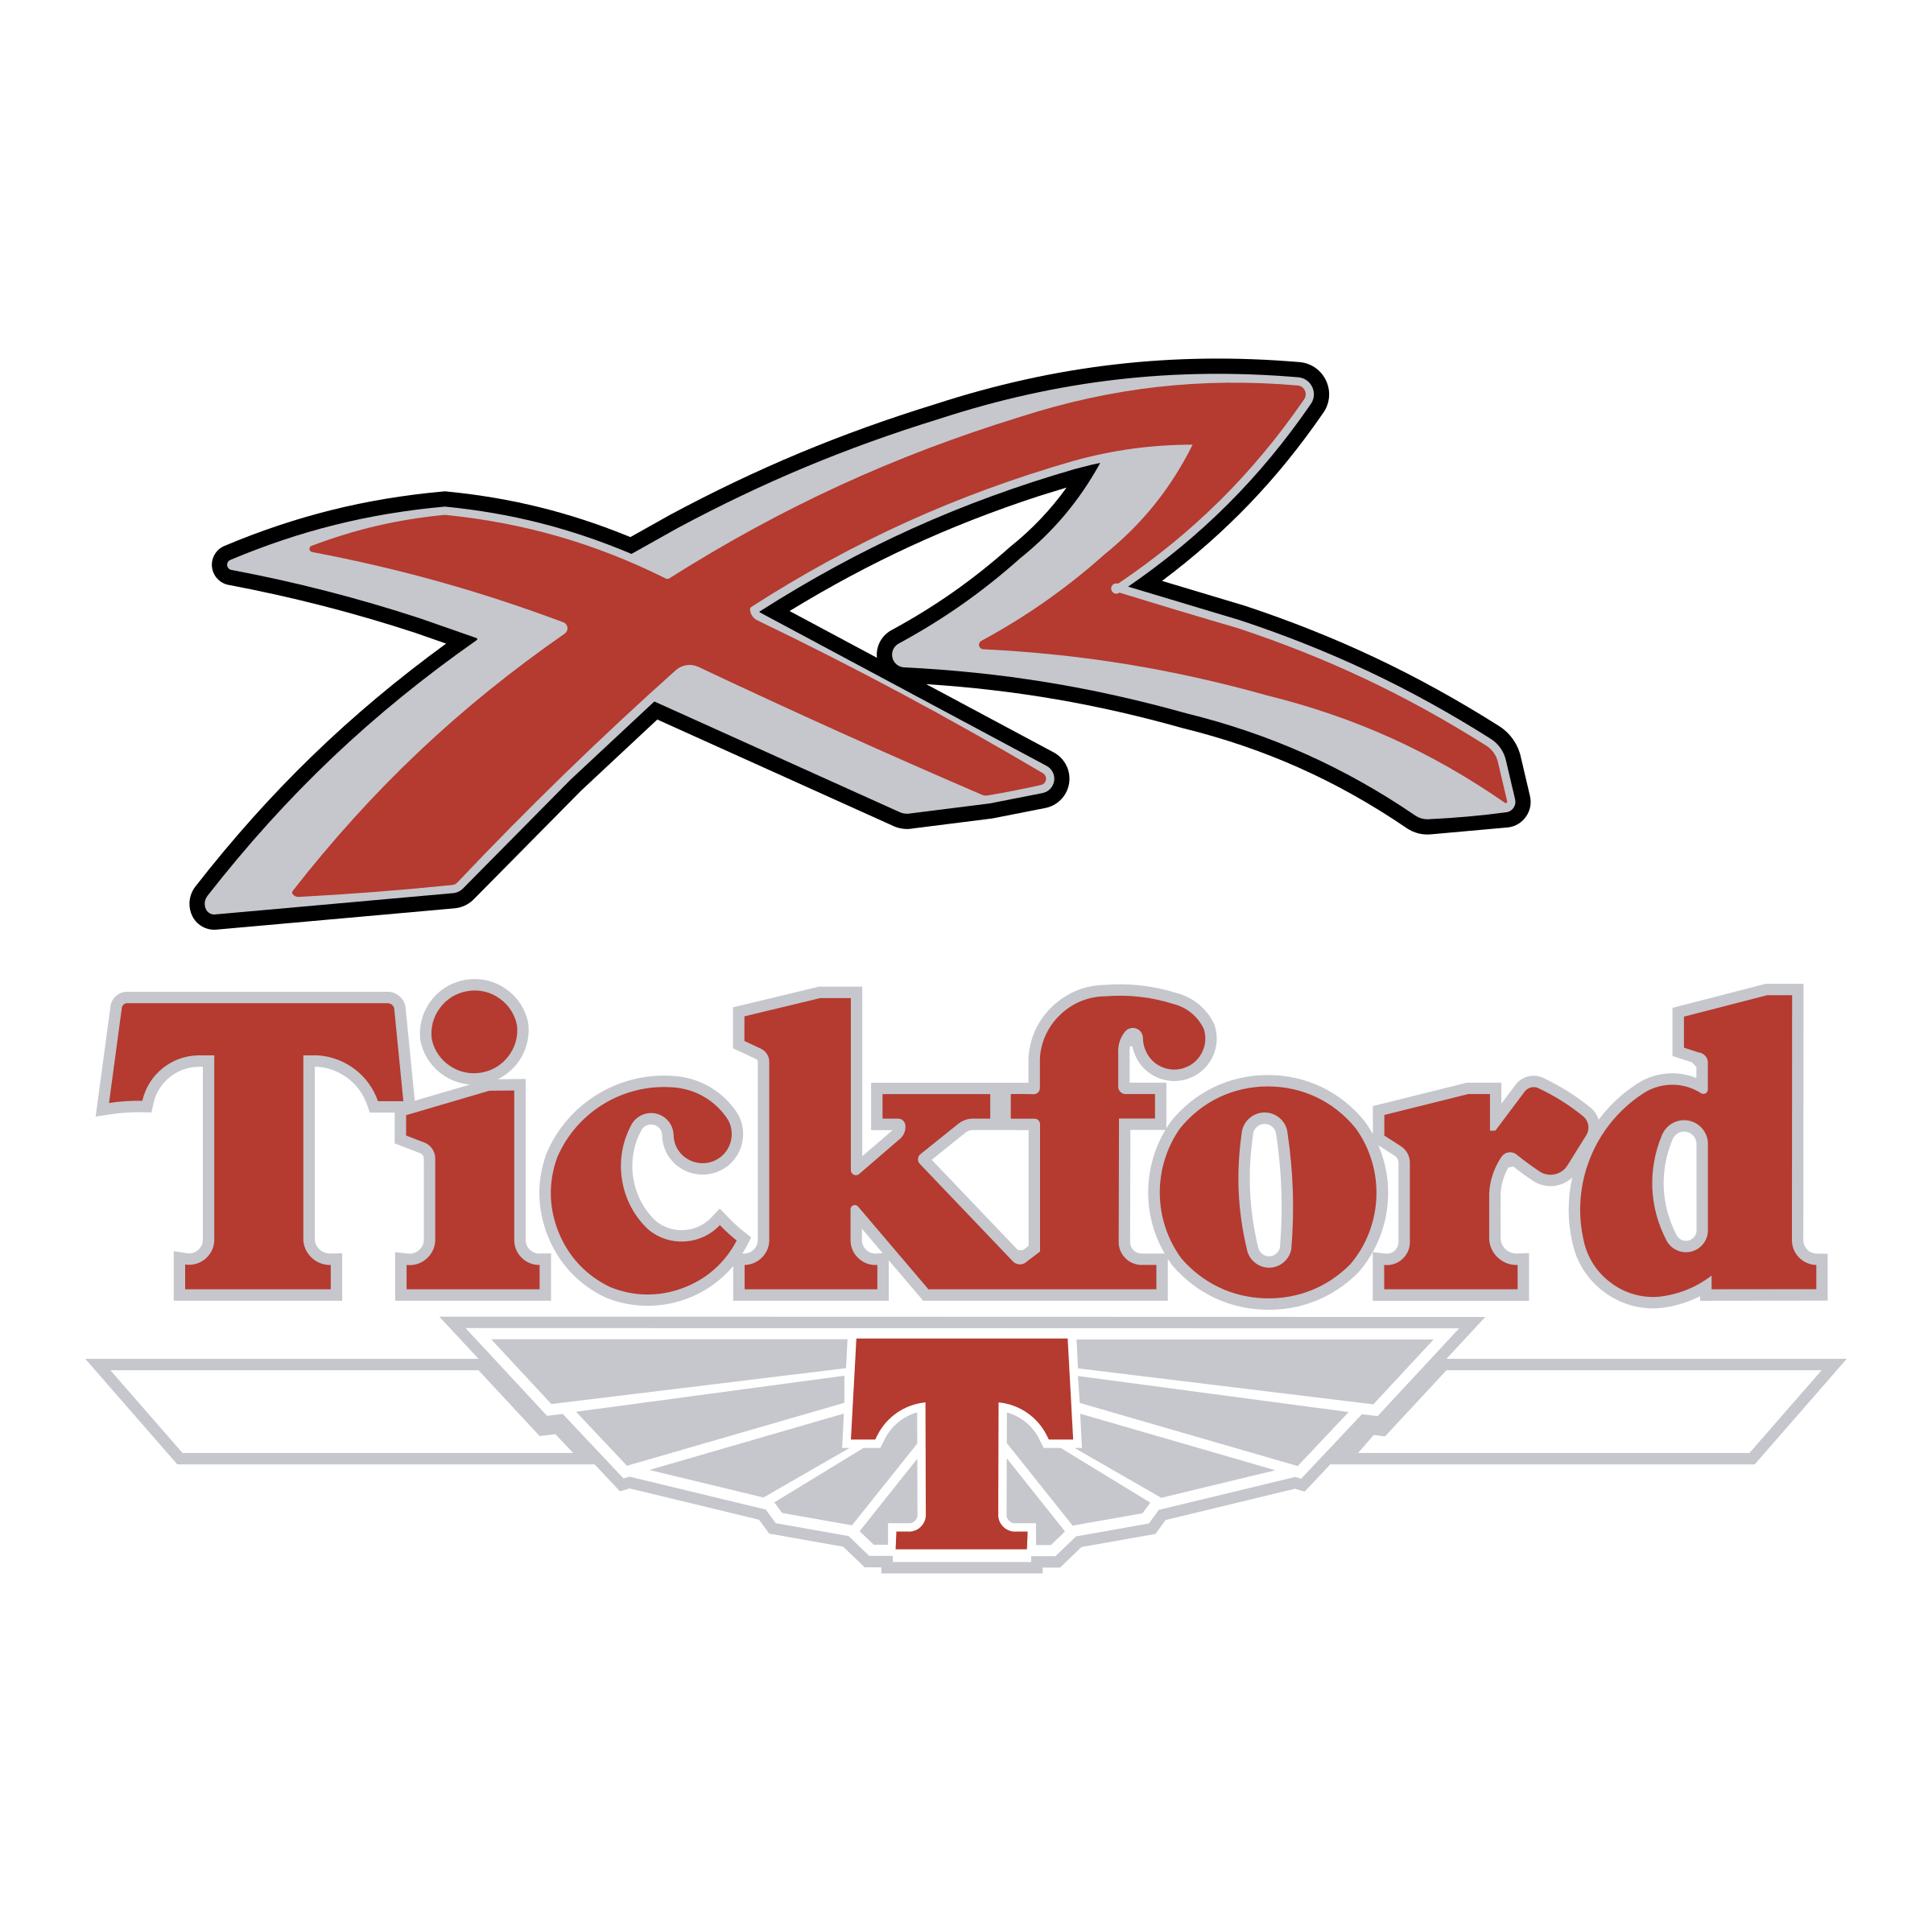 Tickford Logo - Tickford XR Logo PNG Transparent & SVG Vector - Freebie Supply